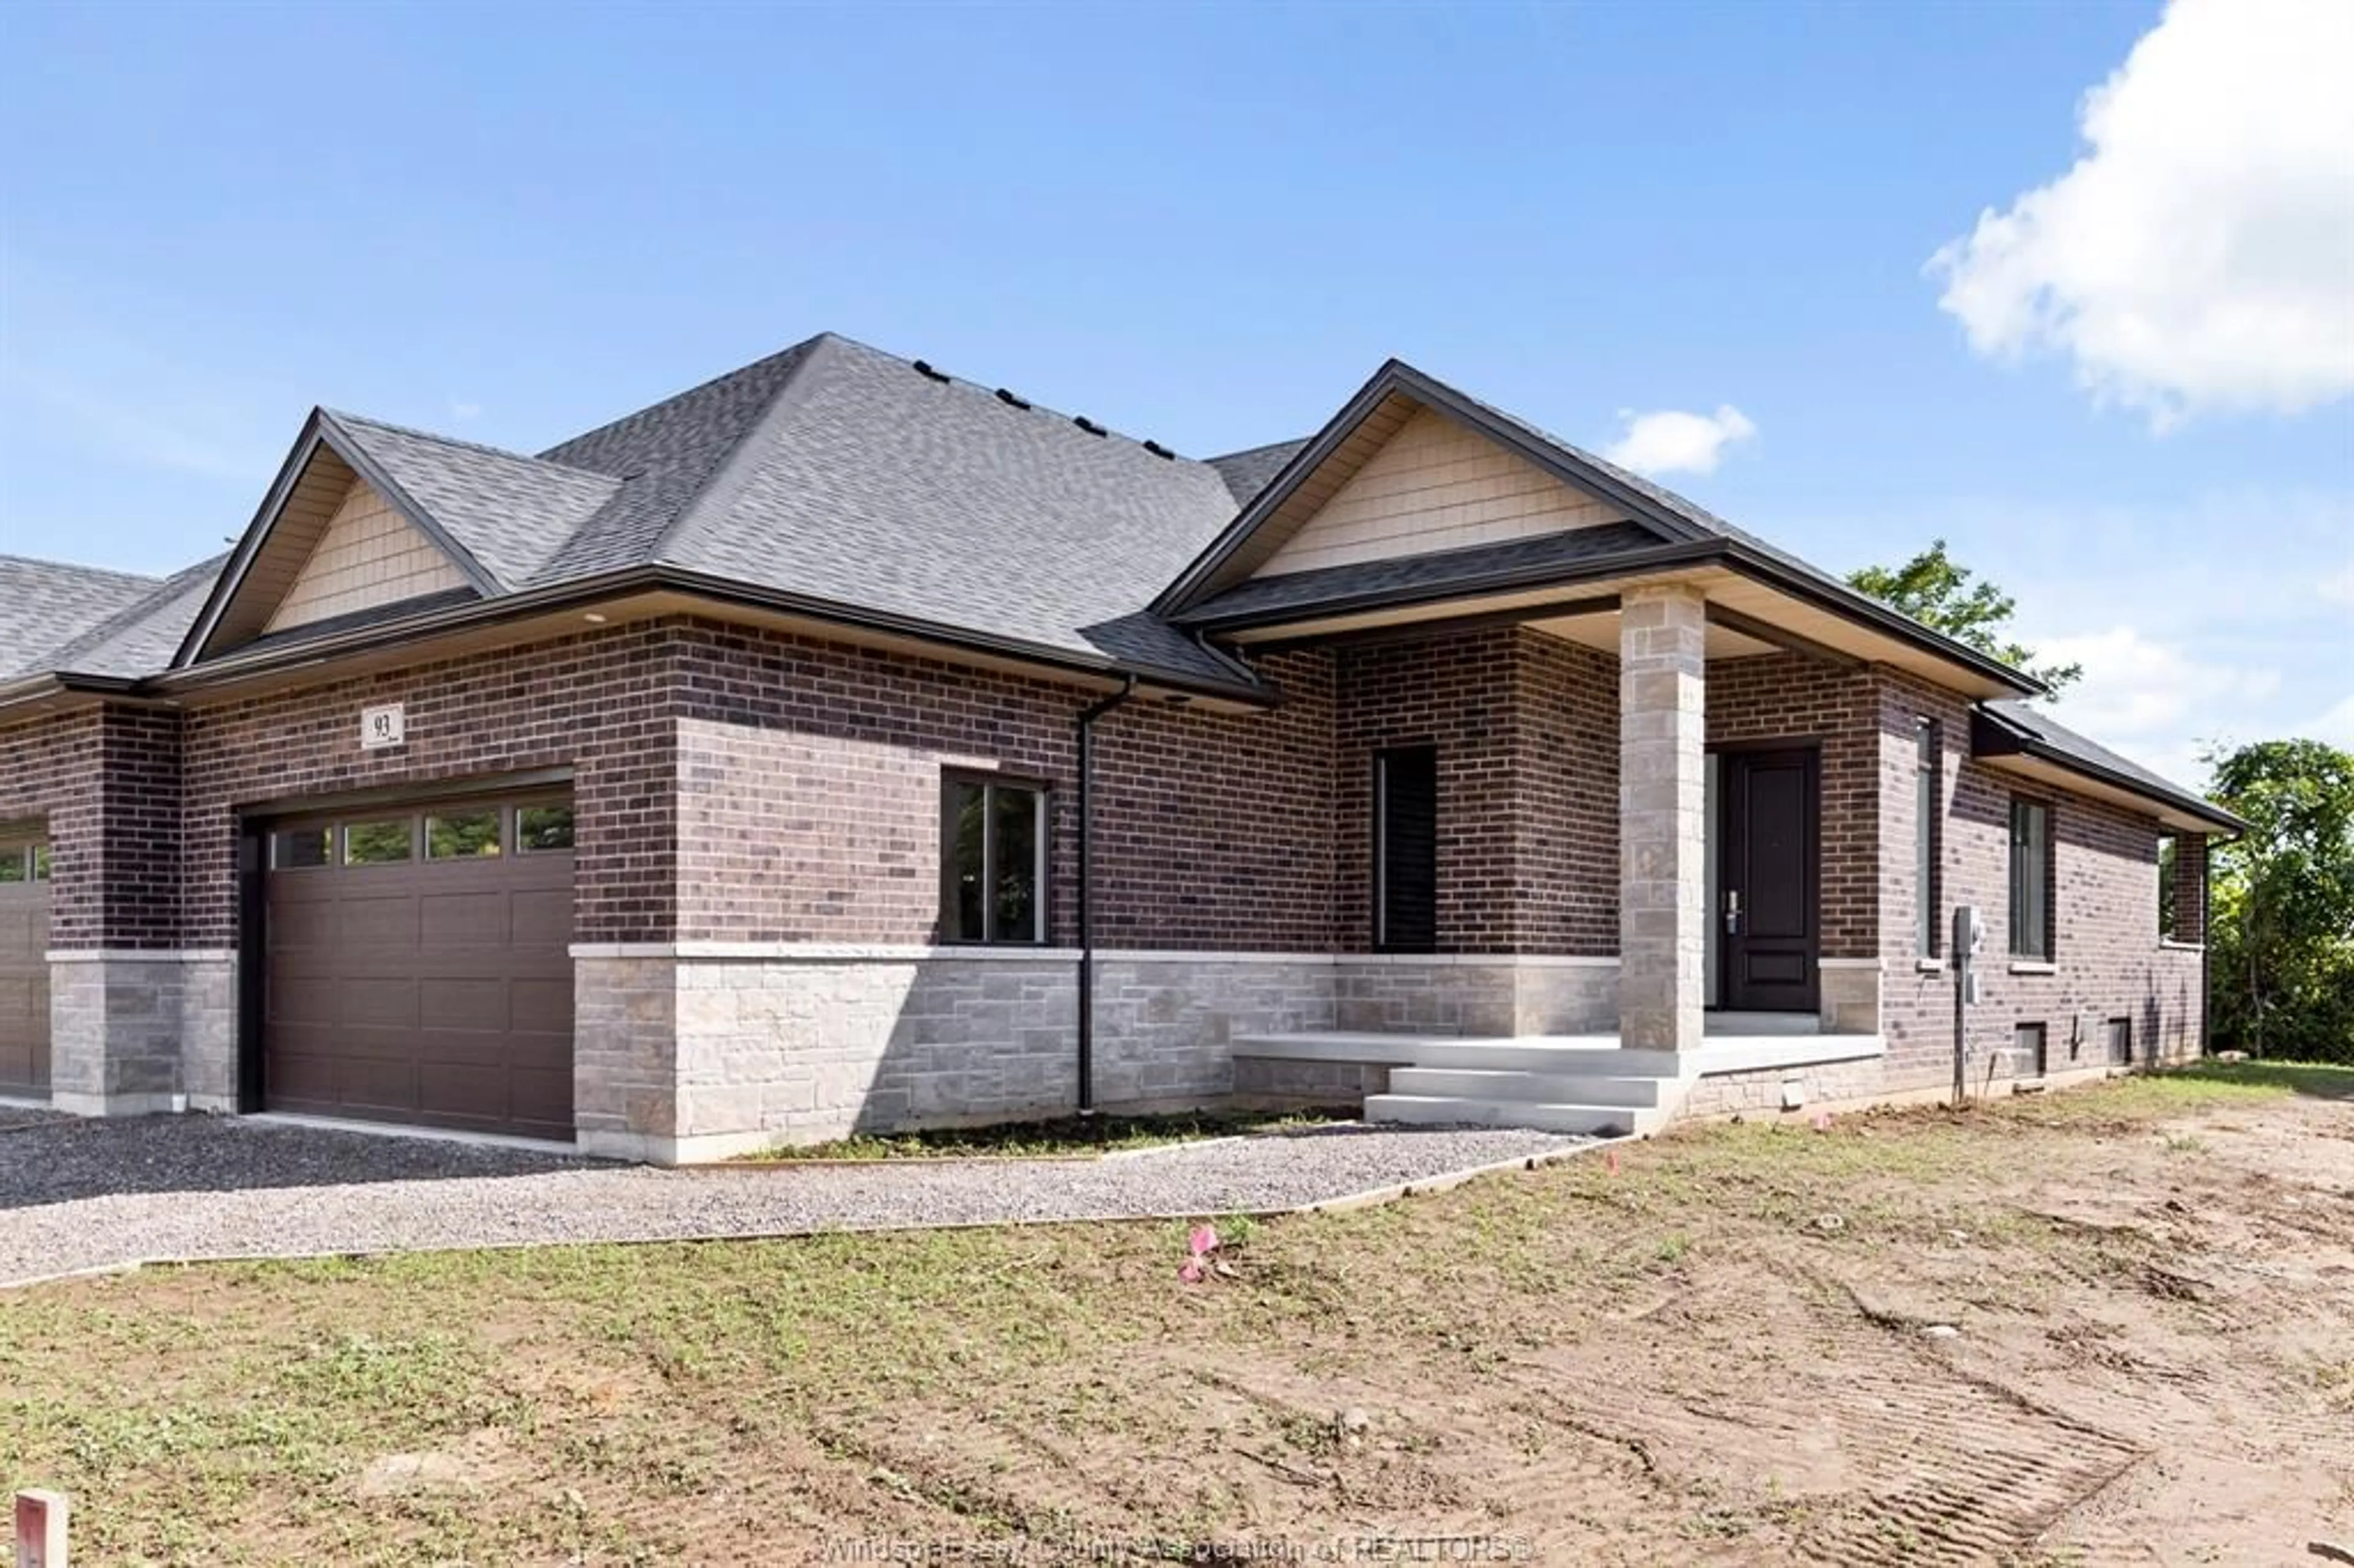 Home with brick exterior material for 101 PEREIRA, Harrow Ontario N0R 1G0